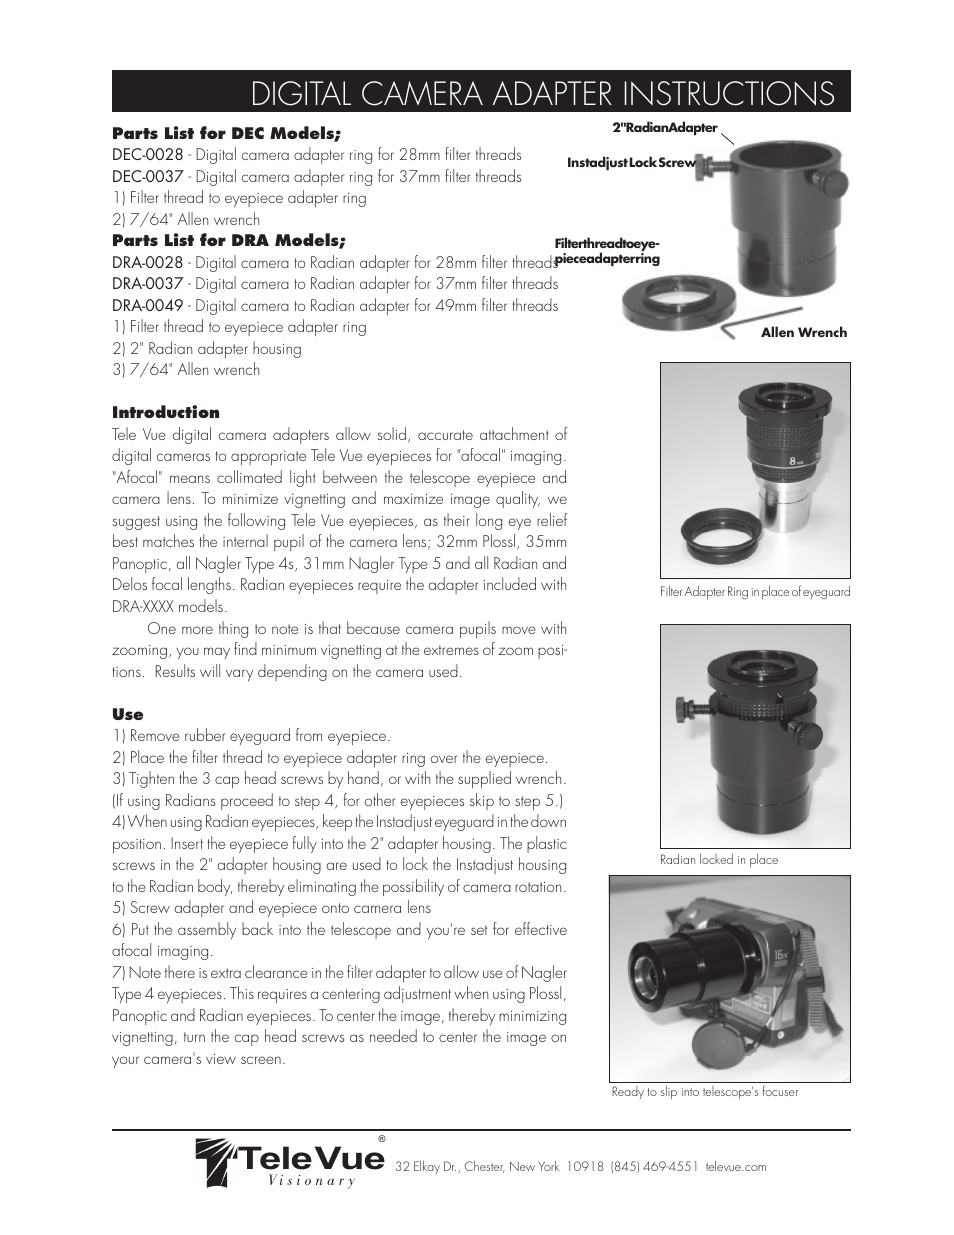 Tele Vue Digital Camera Adapter User Manual | 1 page